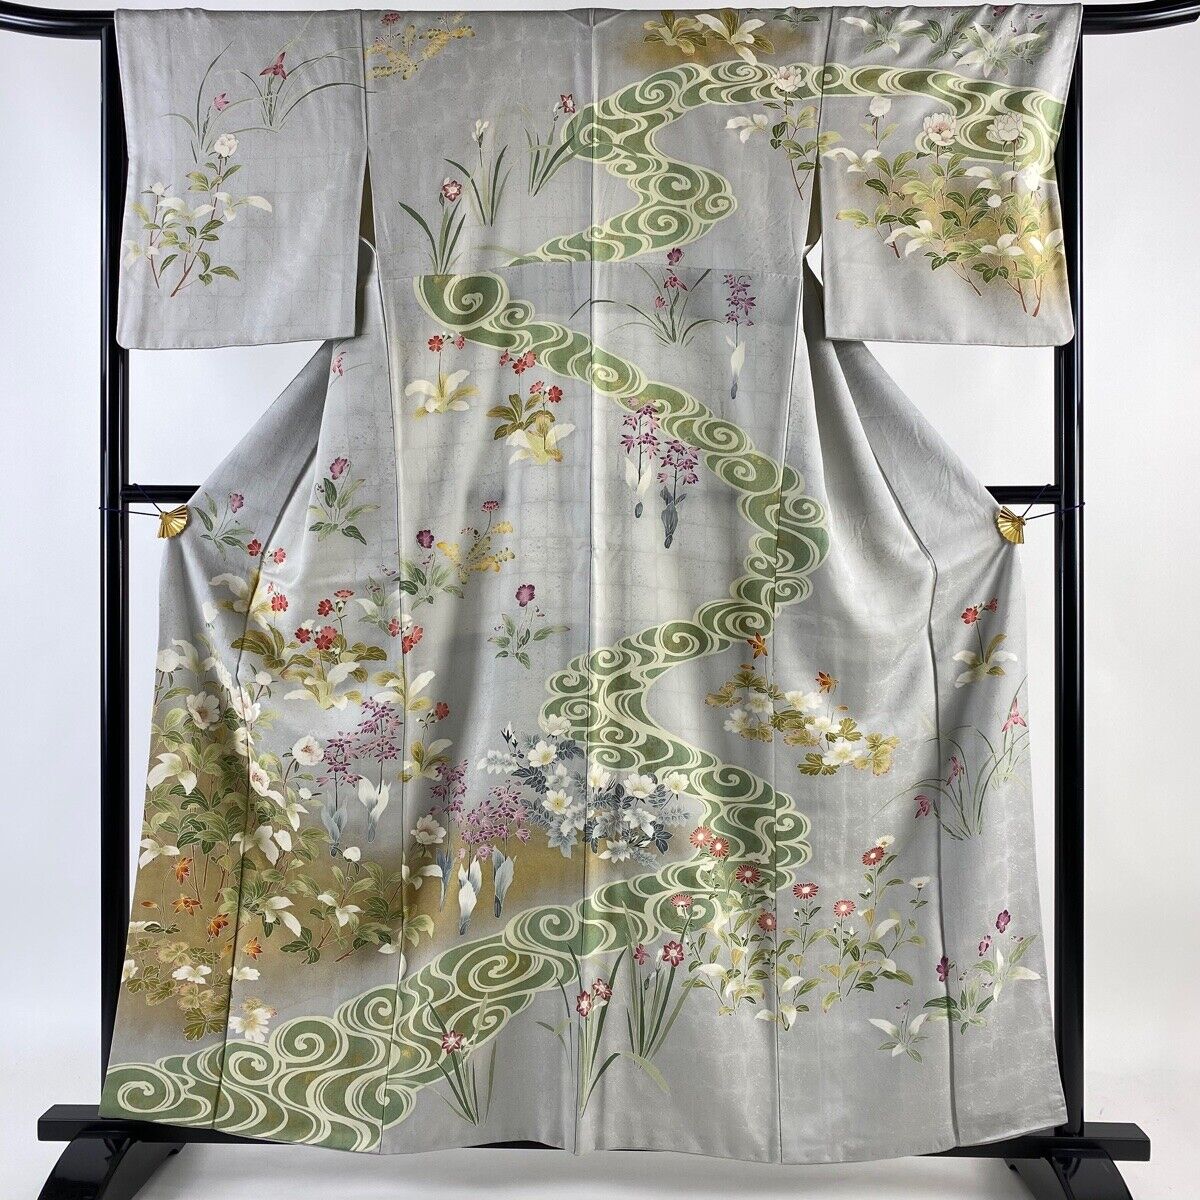 Kimono Homongi  Length 160.5Cm Sleeve 66Cm M Lined With Flowers, Flowing Water,